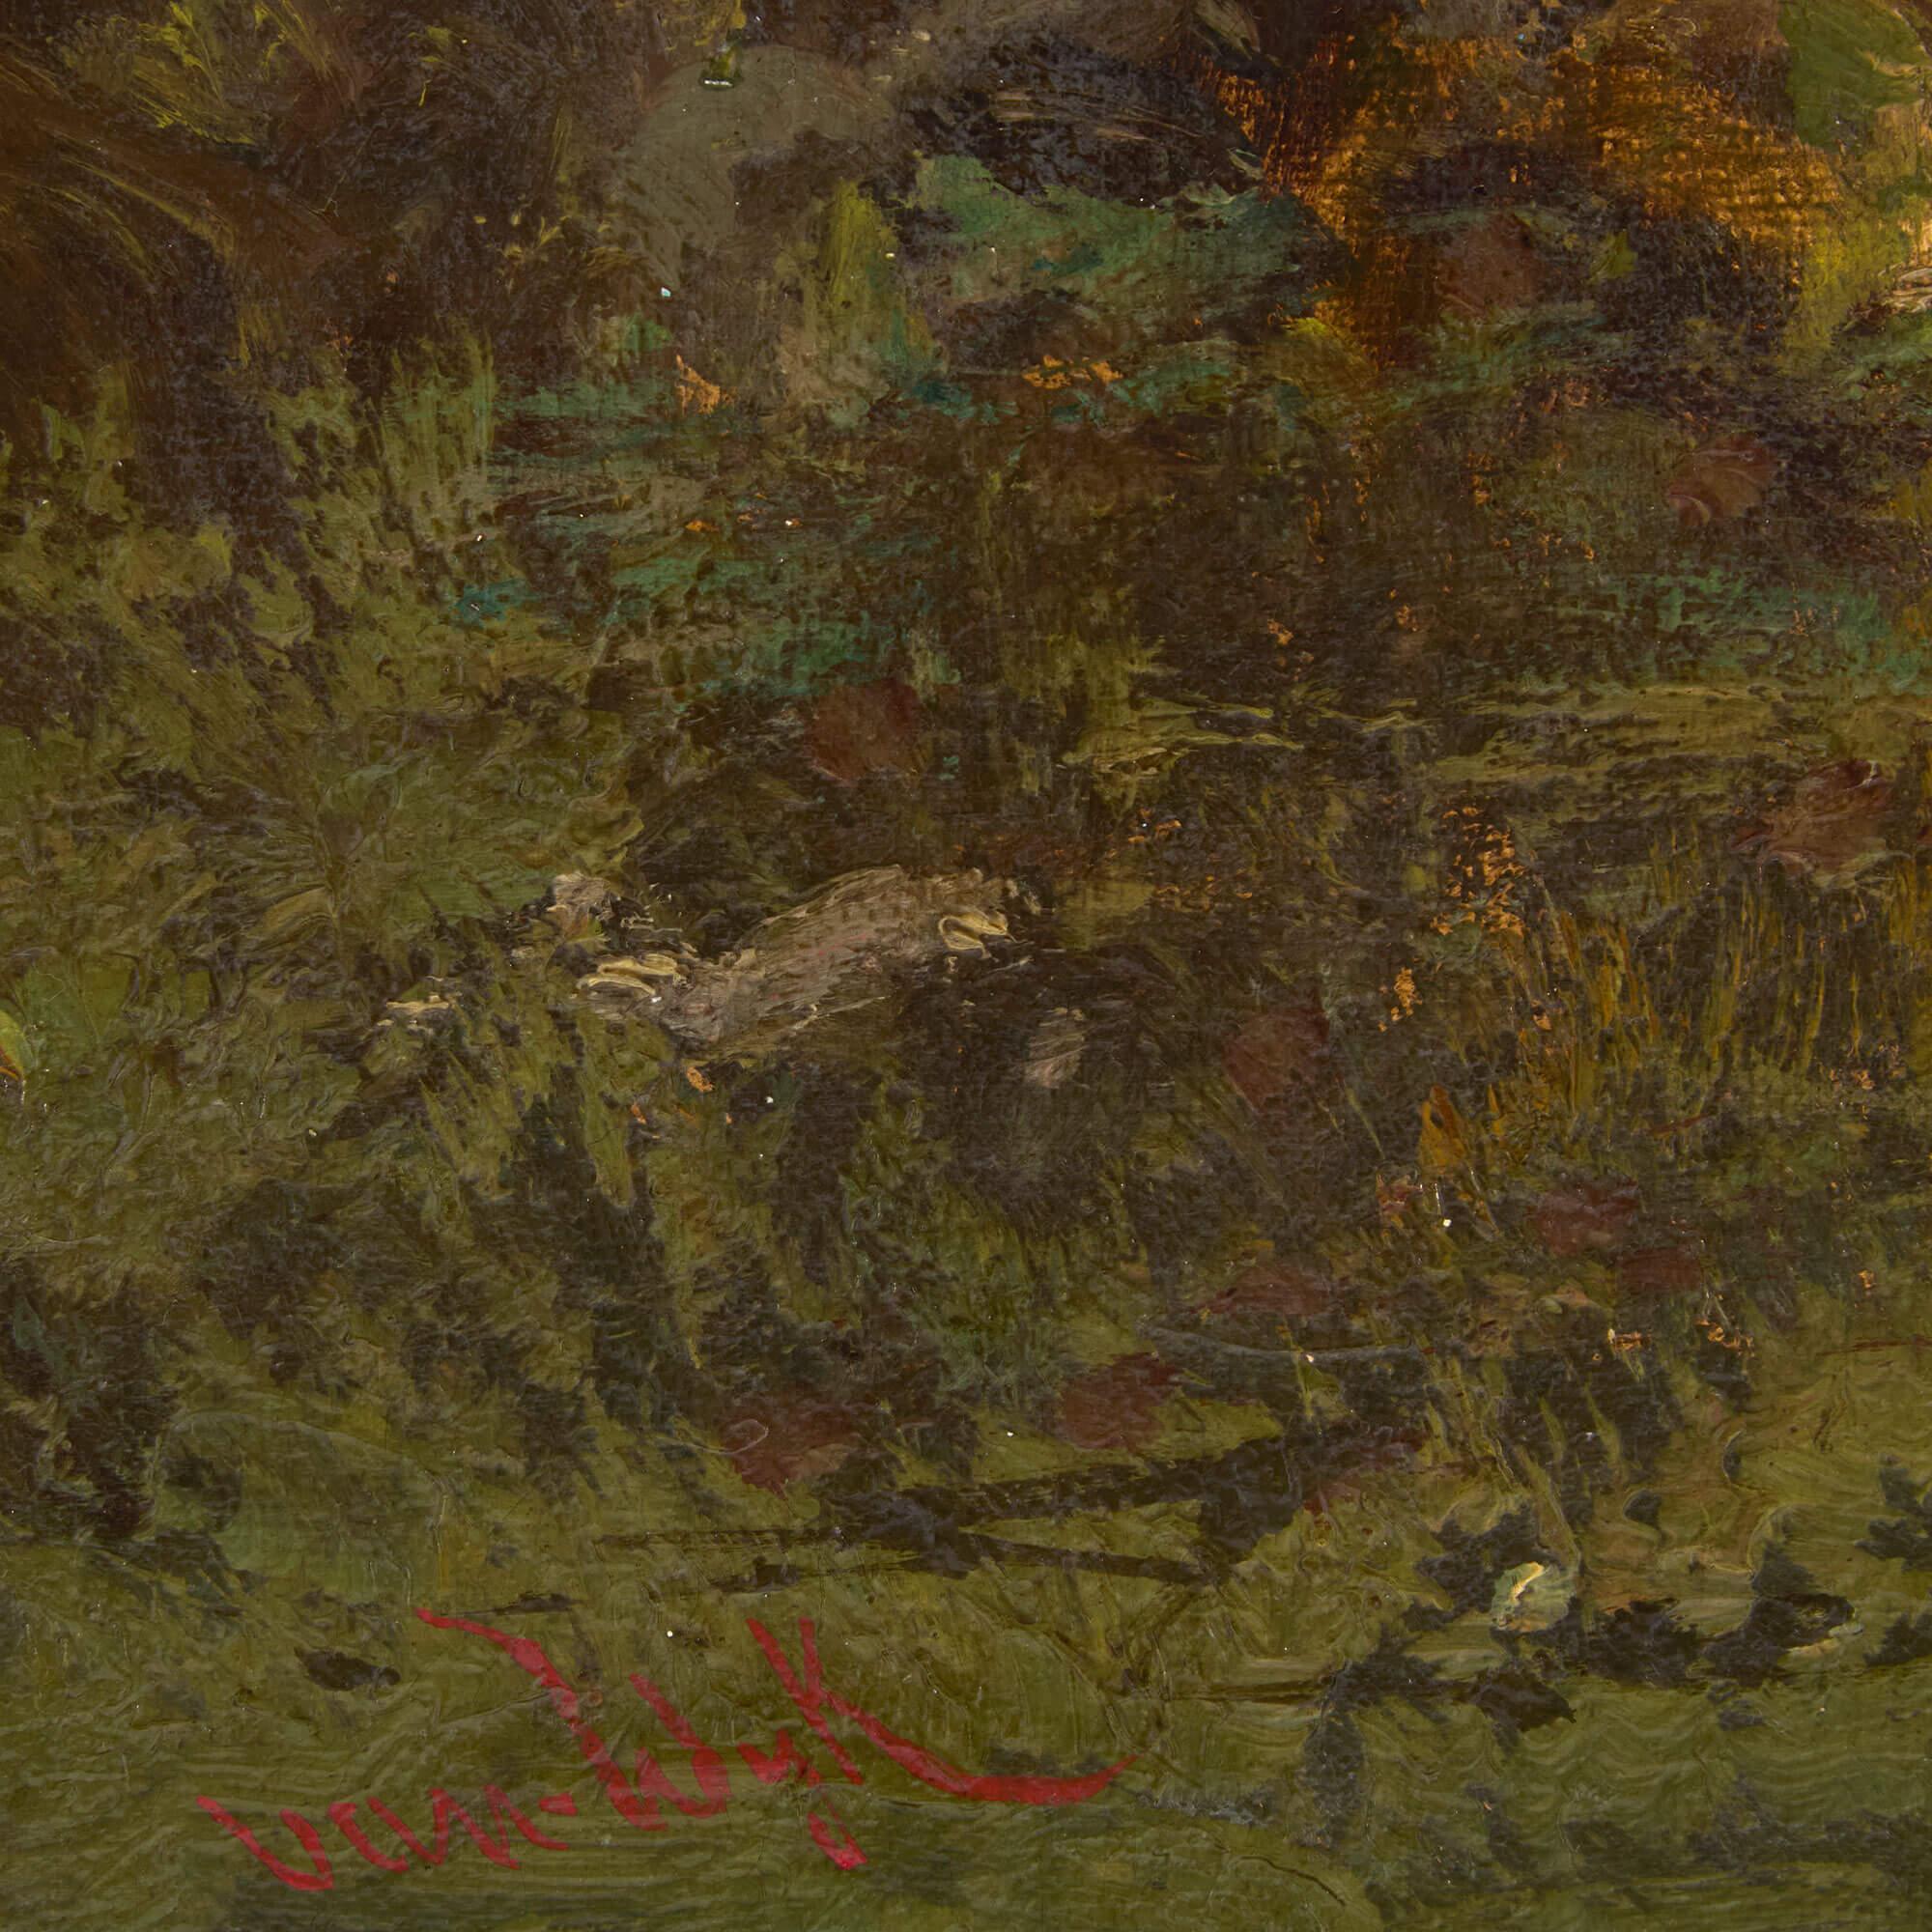 Set of Four Orientalist Landscape Paintings by van Wijk  For Sale 6